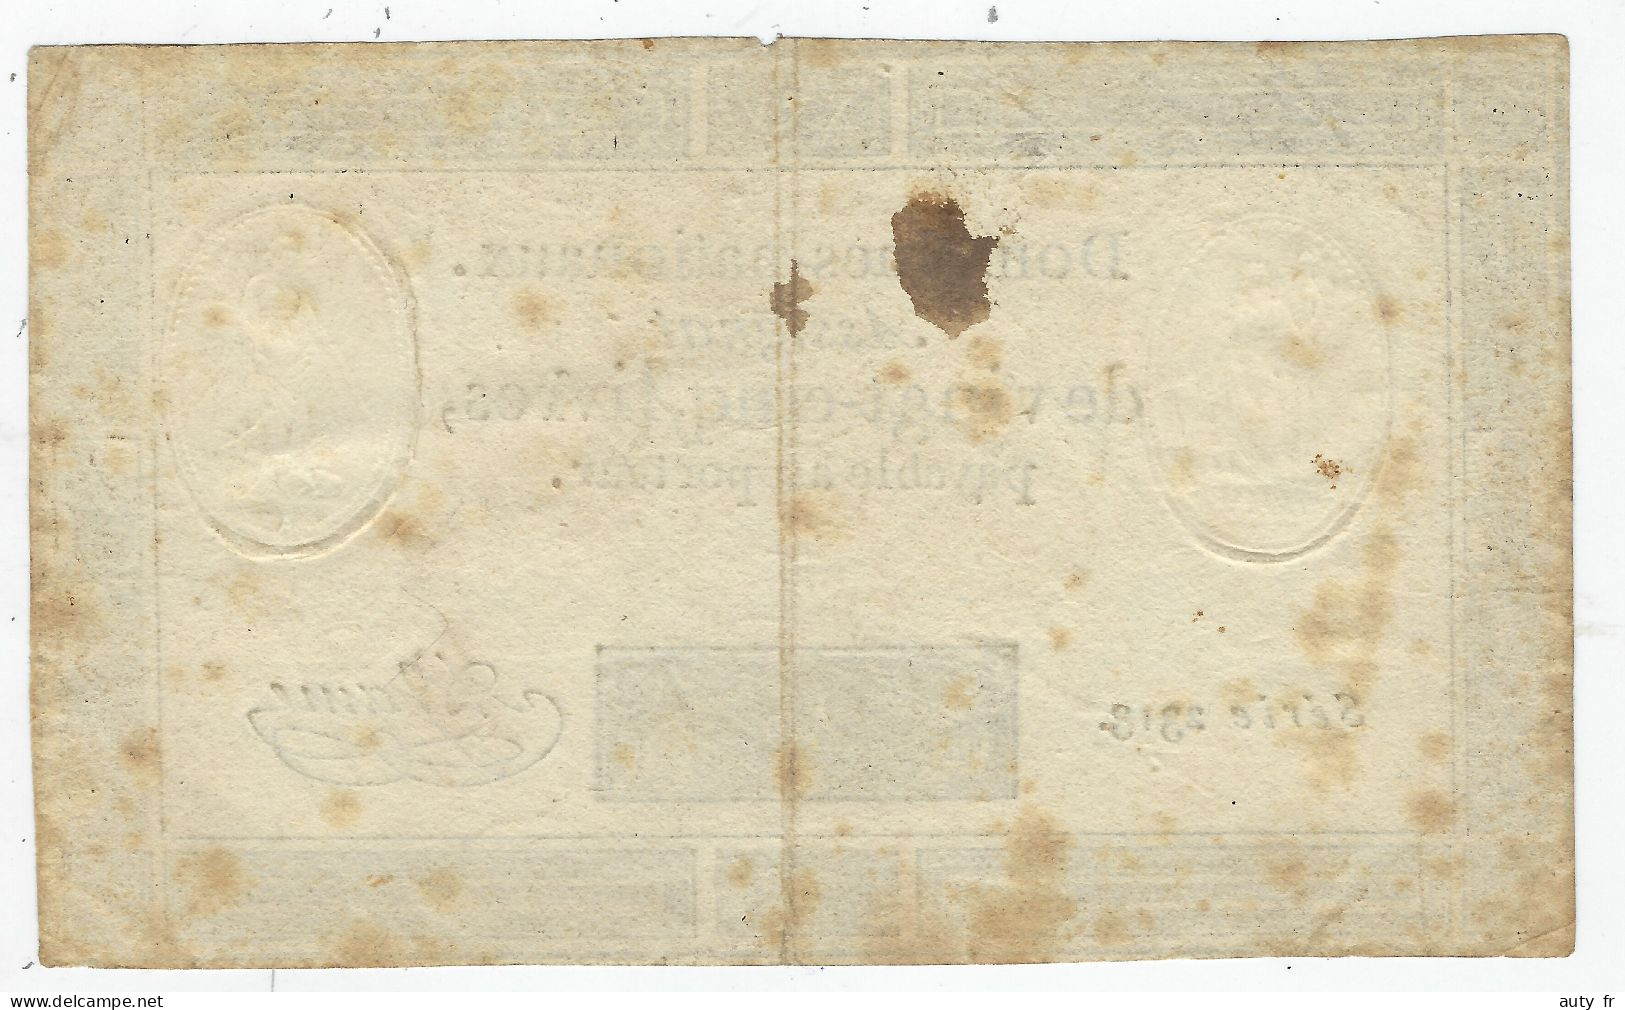 1 Assignat De 25 Livres 6 Juin 1793 Signé Jame - Assignats